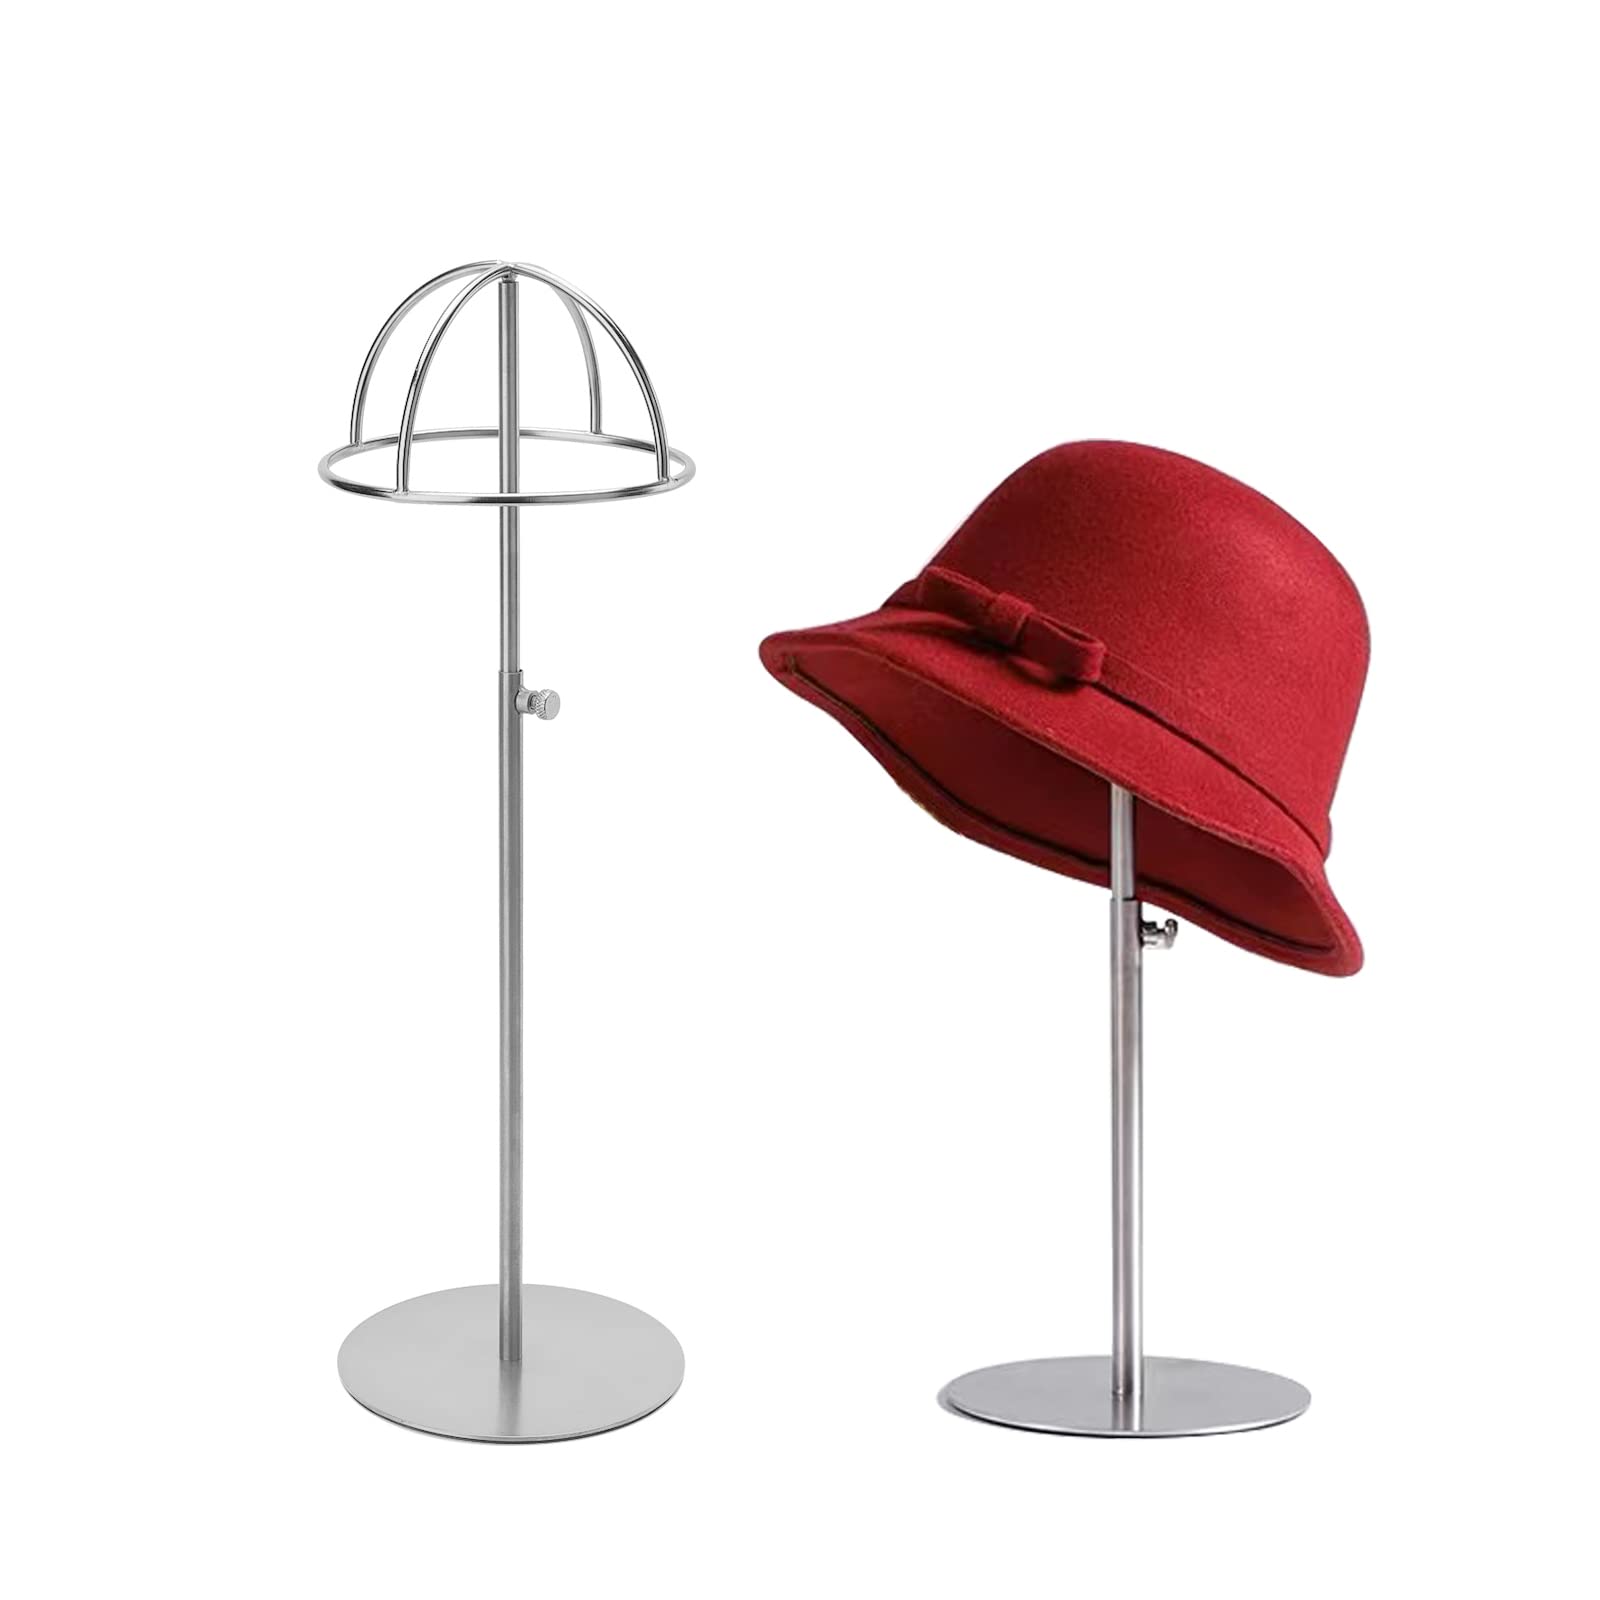  hat display stands